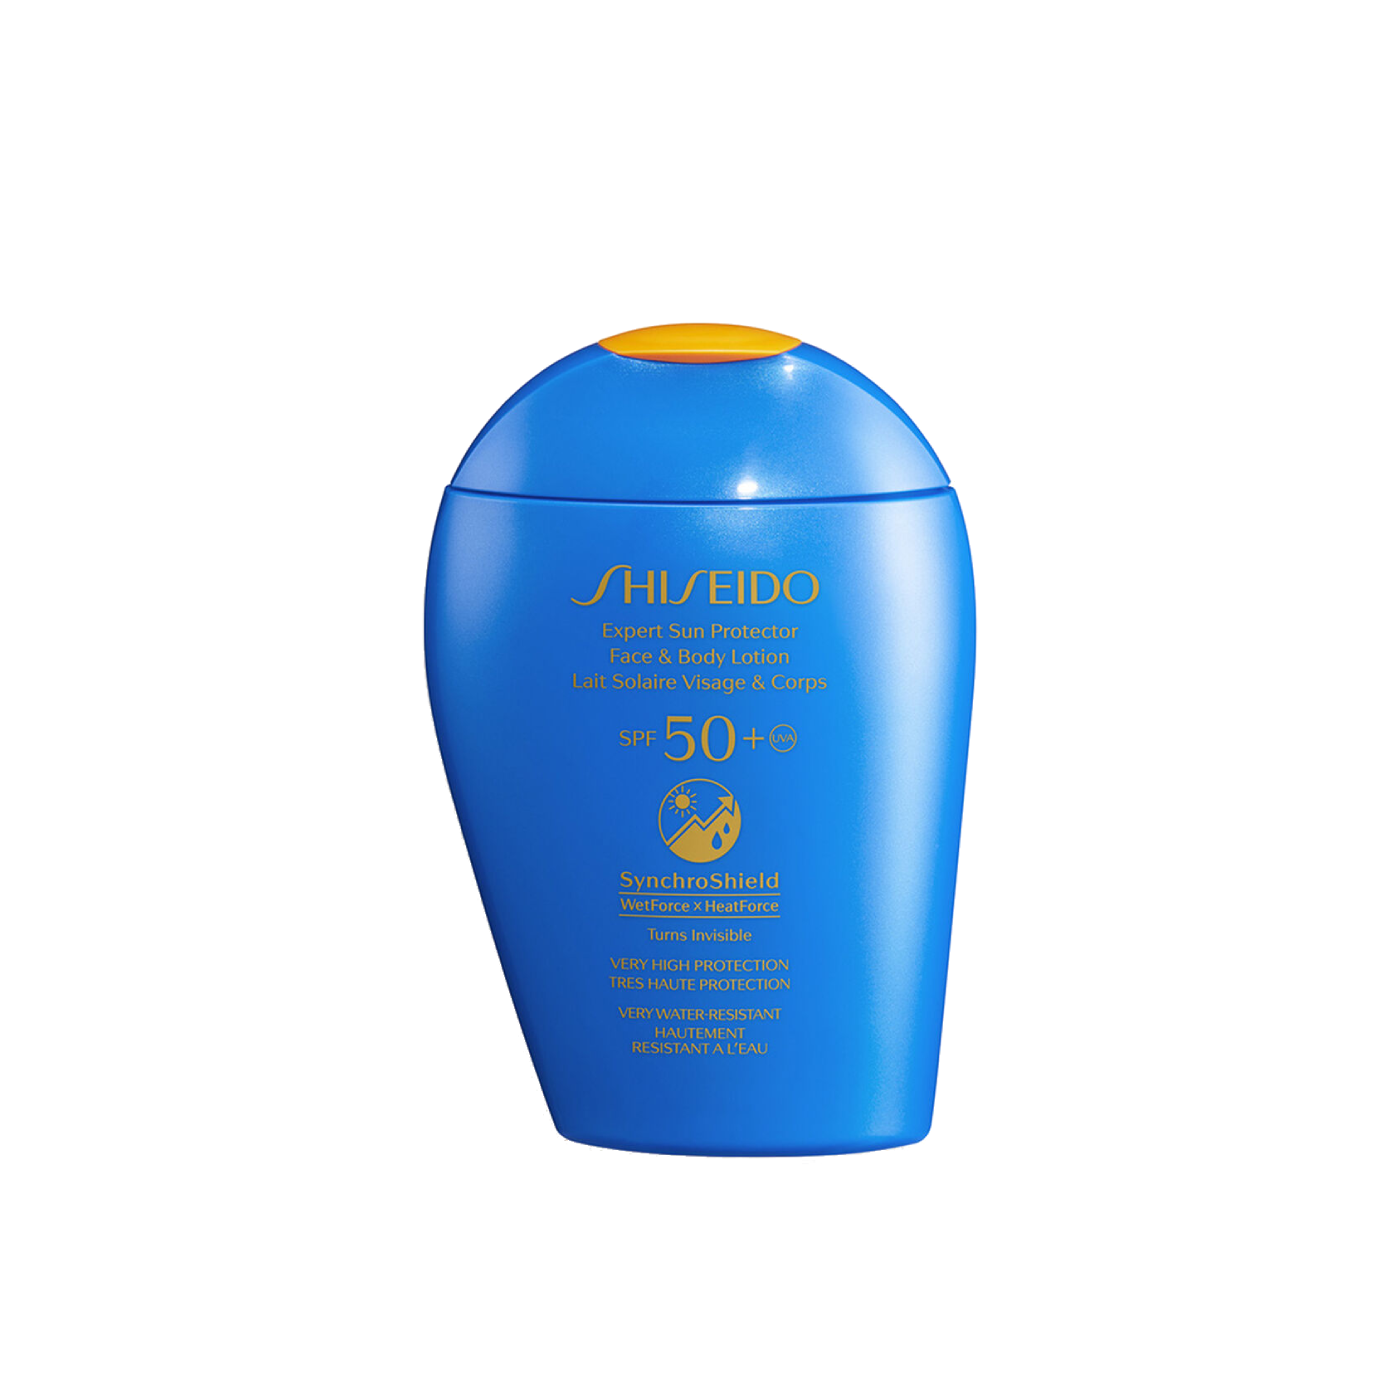 Shiseido Expert Sun Protector Face & Body Lotion SPF 50 + UVA 150ml